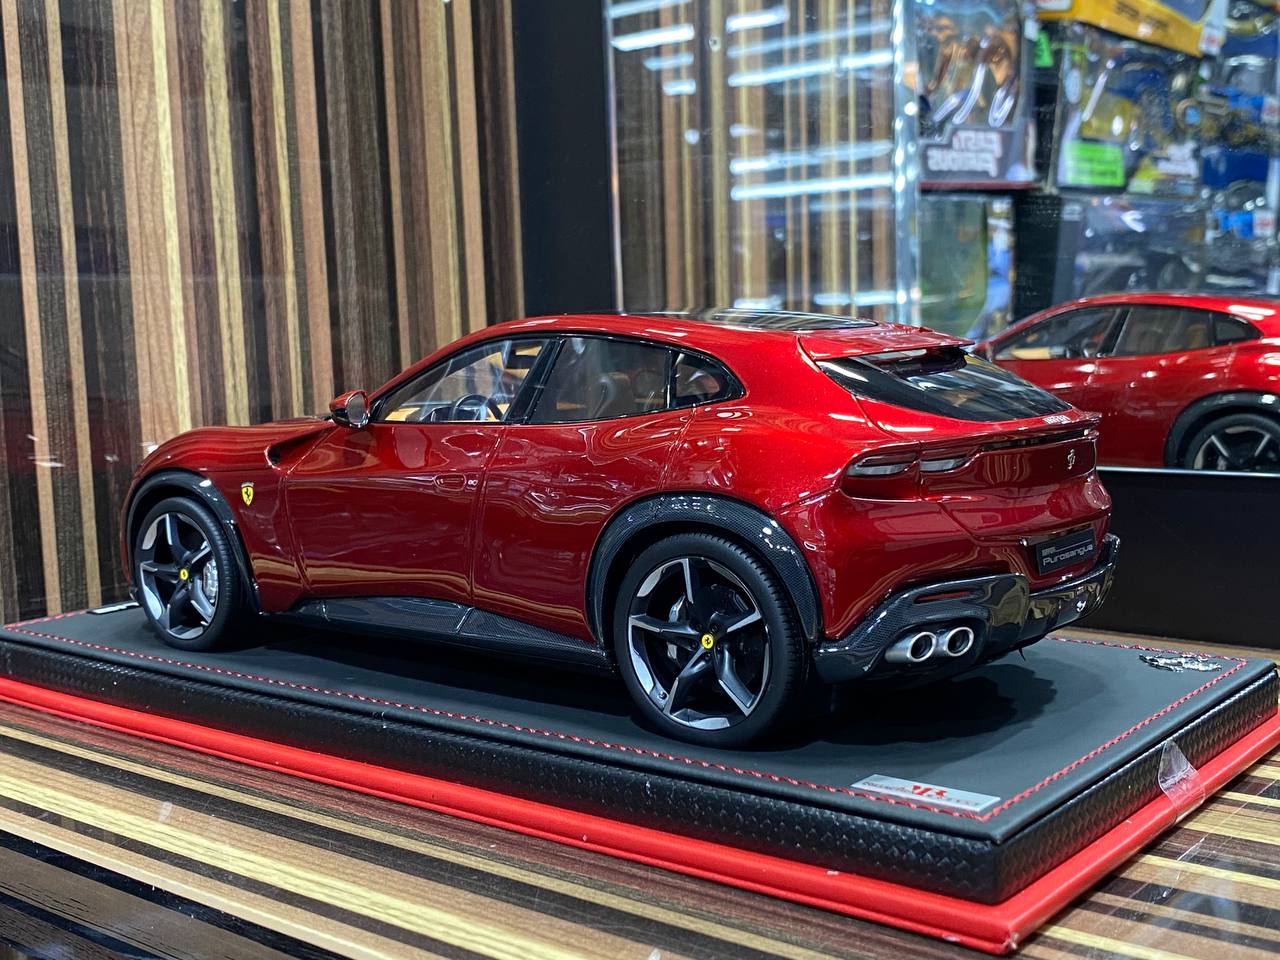 1/18 Ferrari Purosangue RED MR Collection|Sold in Dturman.com Dubai UAE.